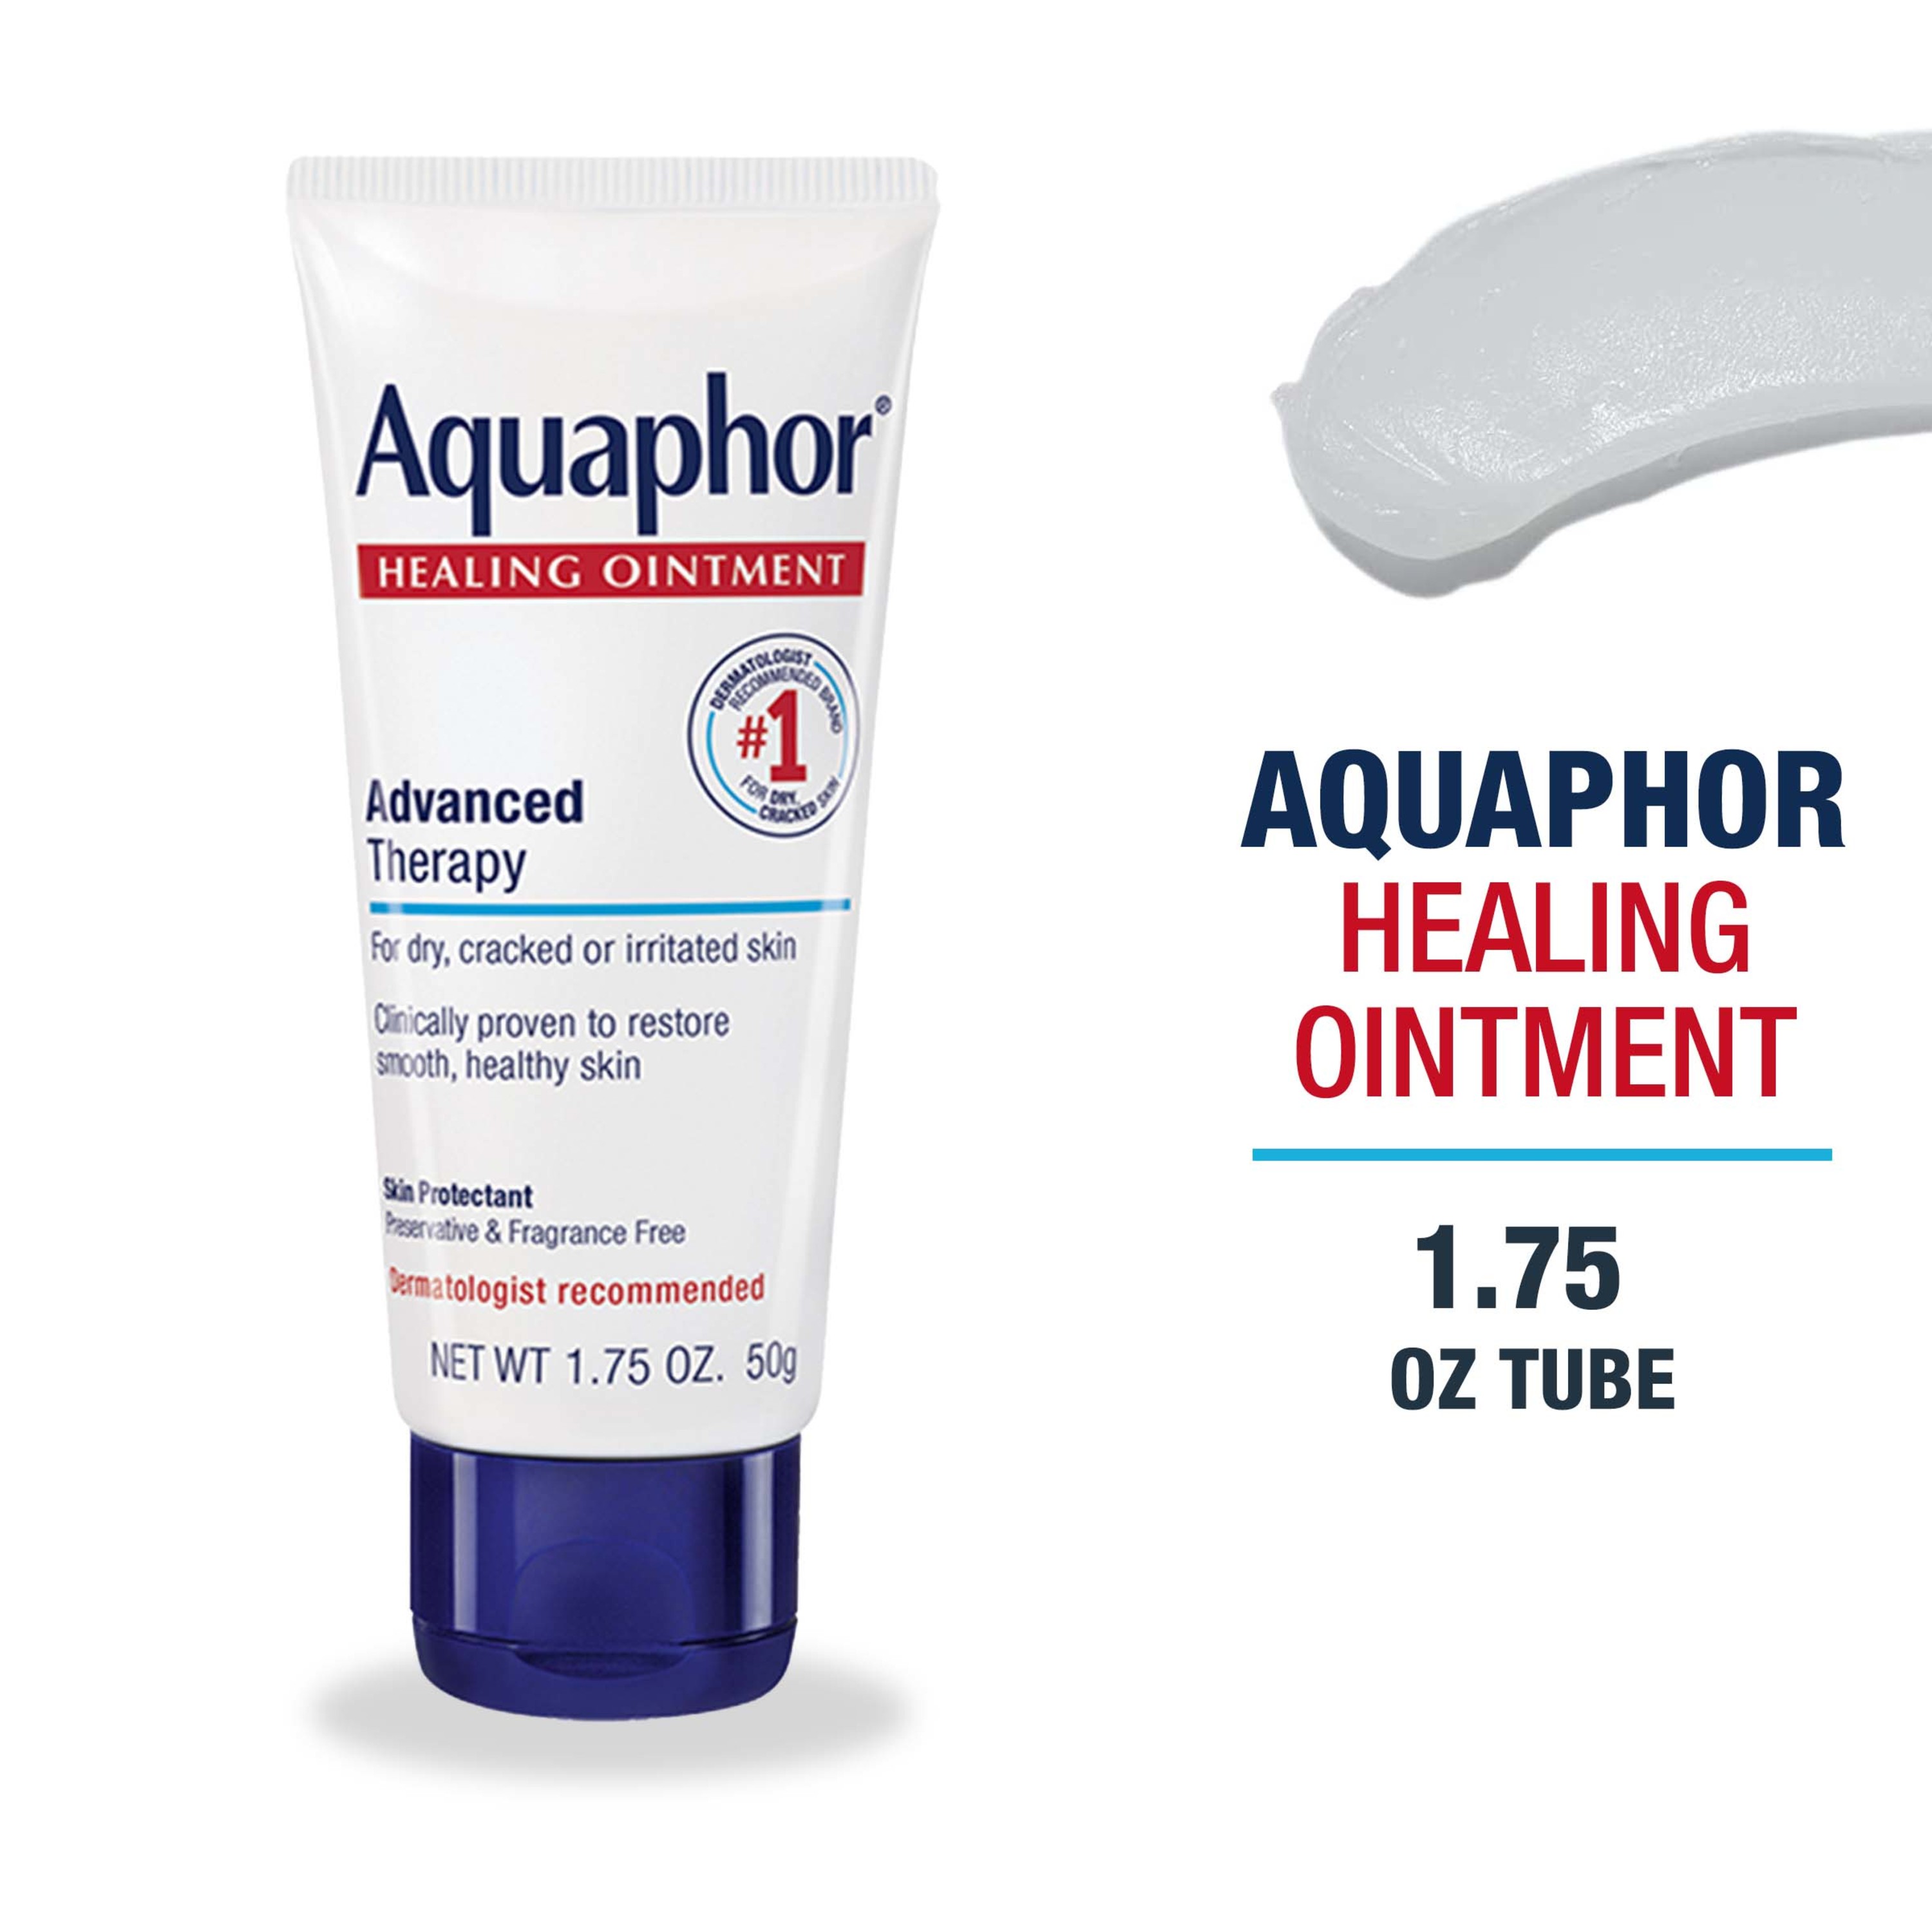 Aquaphor Healing Ointment Skin Protectant, Use After Hand Washing, 1.75 oz. Tube - image 1 of 17